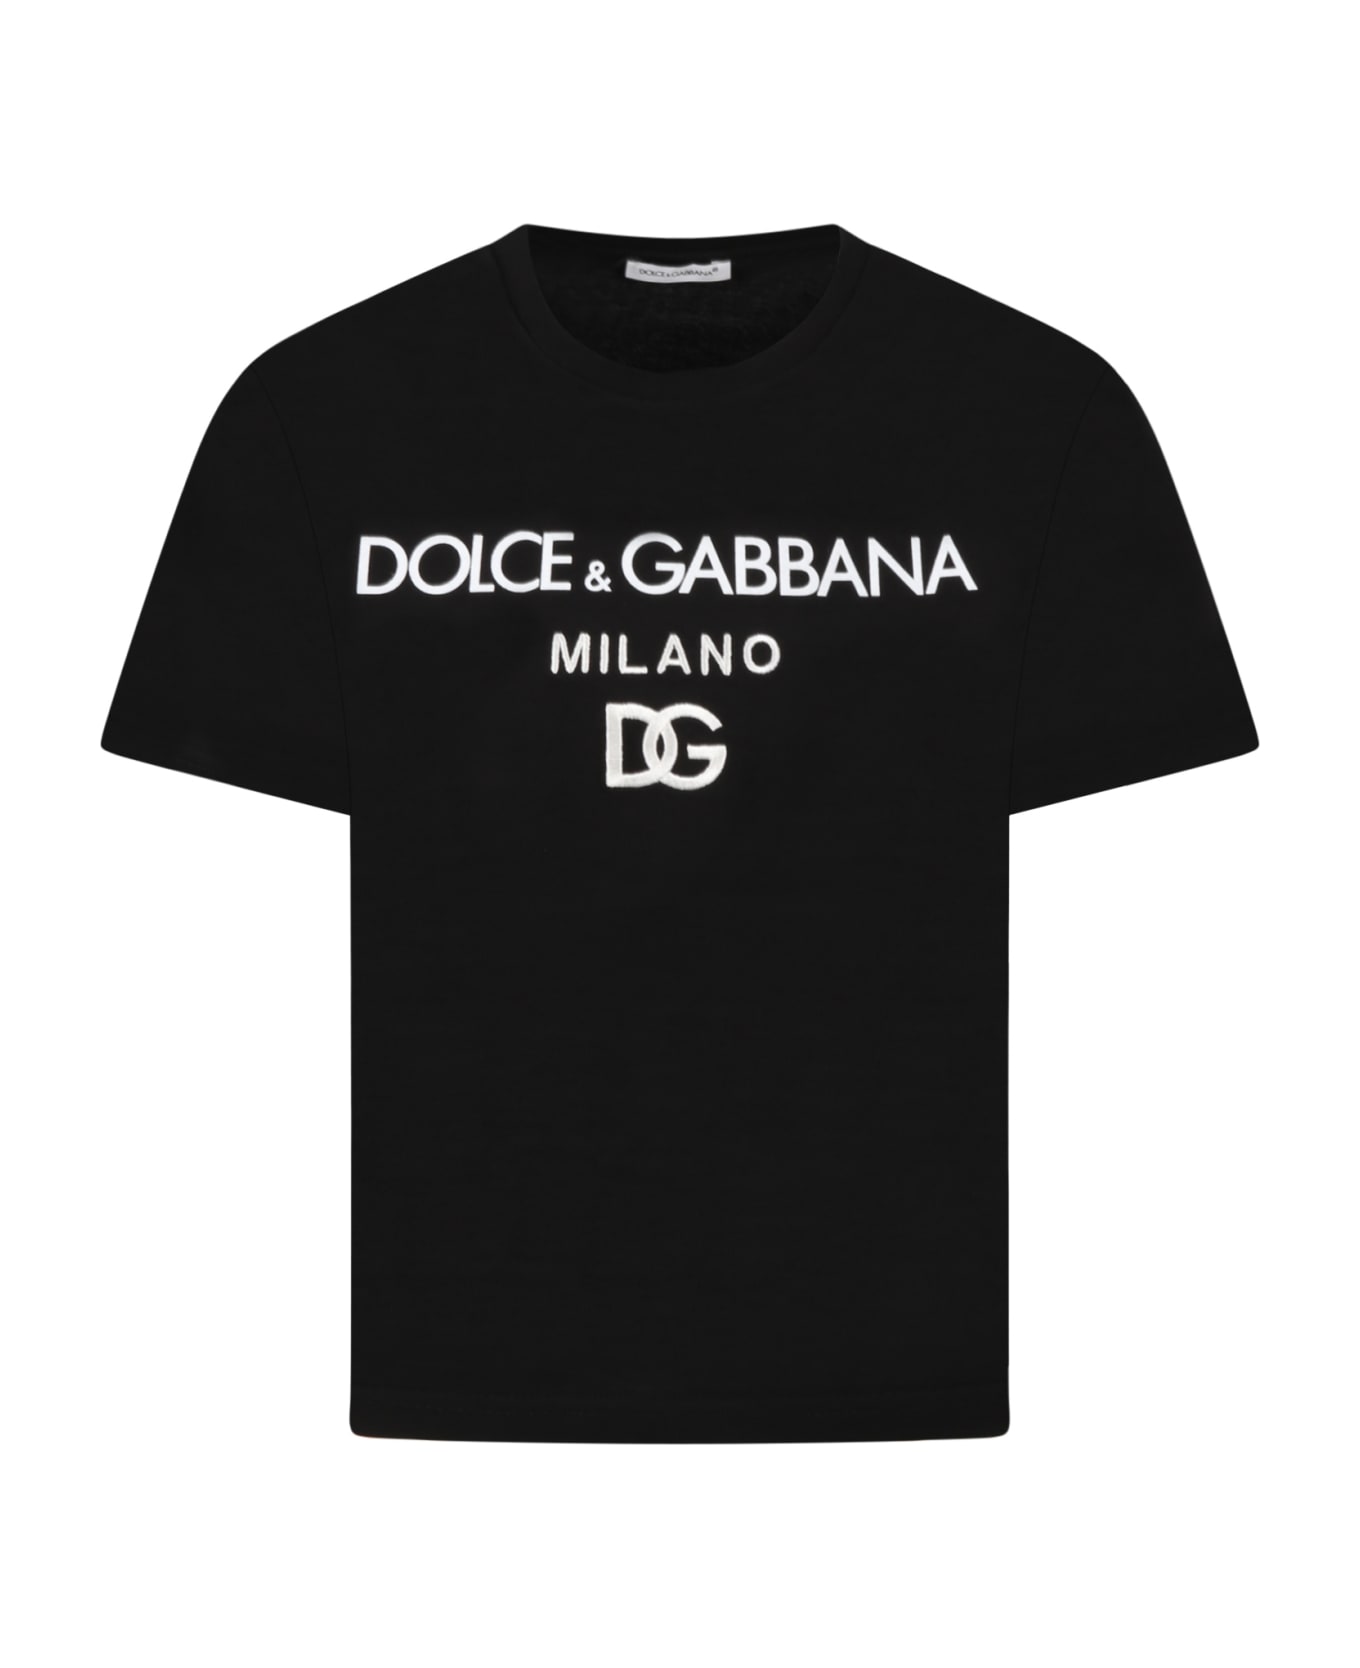 Dolce & Gabbana Black T-shirt For Kids With Logos - Black